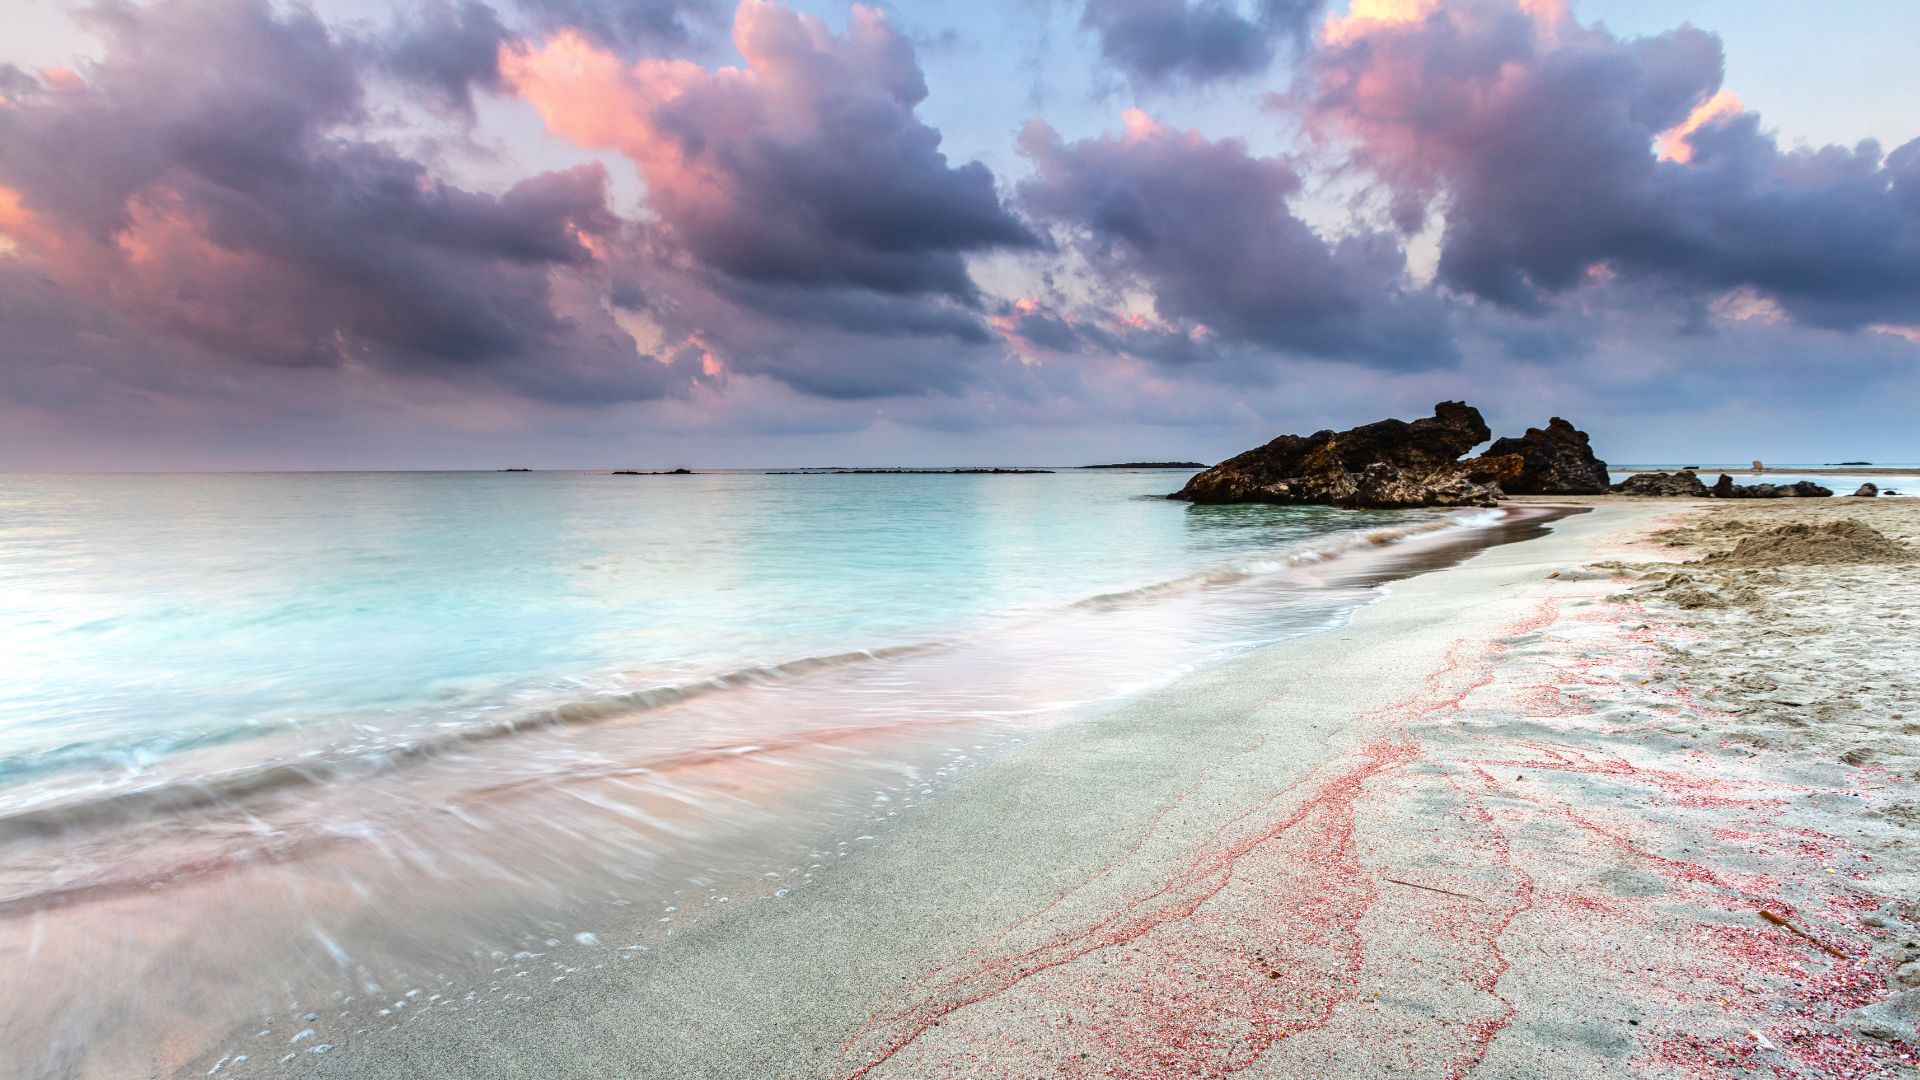 The Most Beautiful Mediterranean Beaches